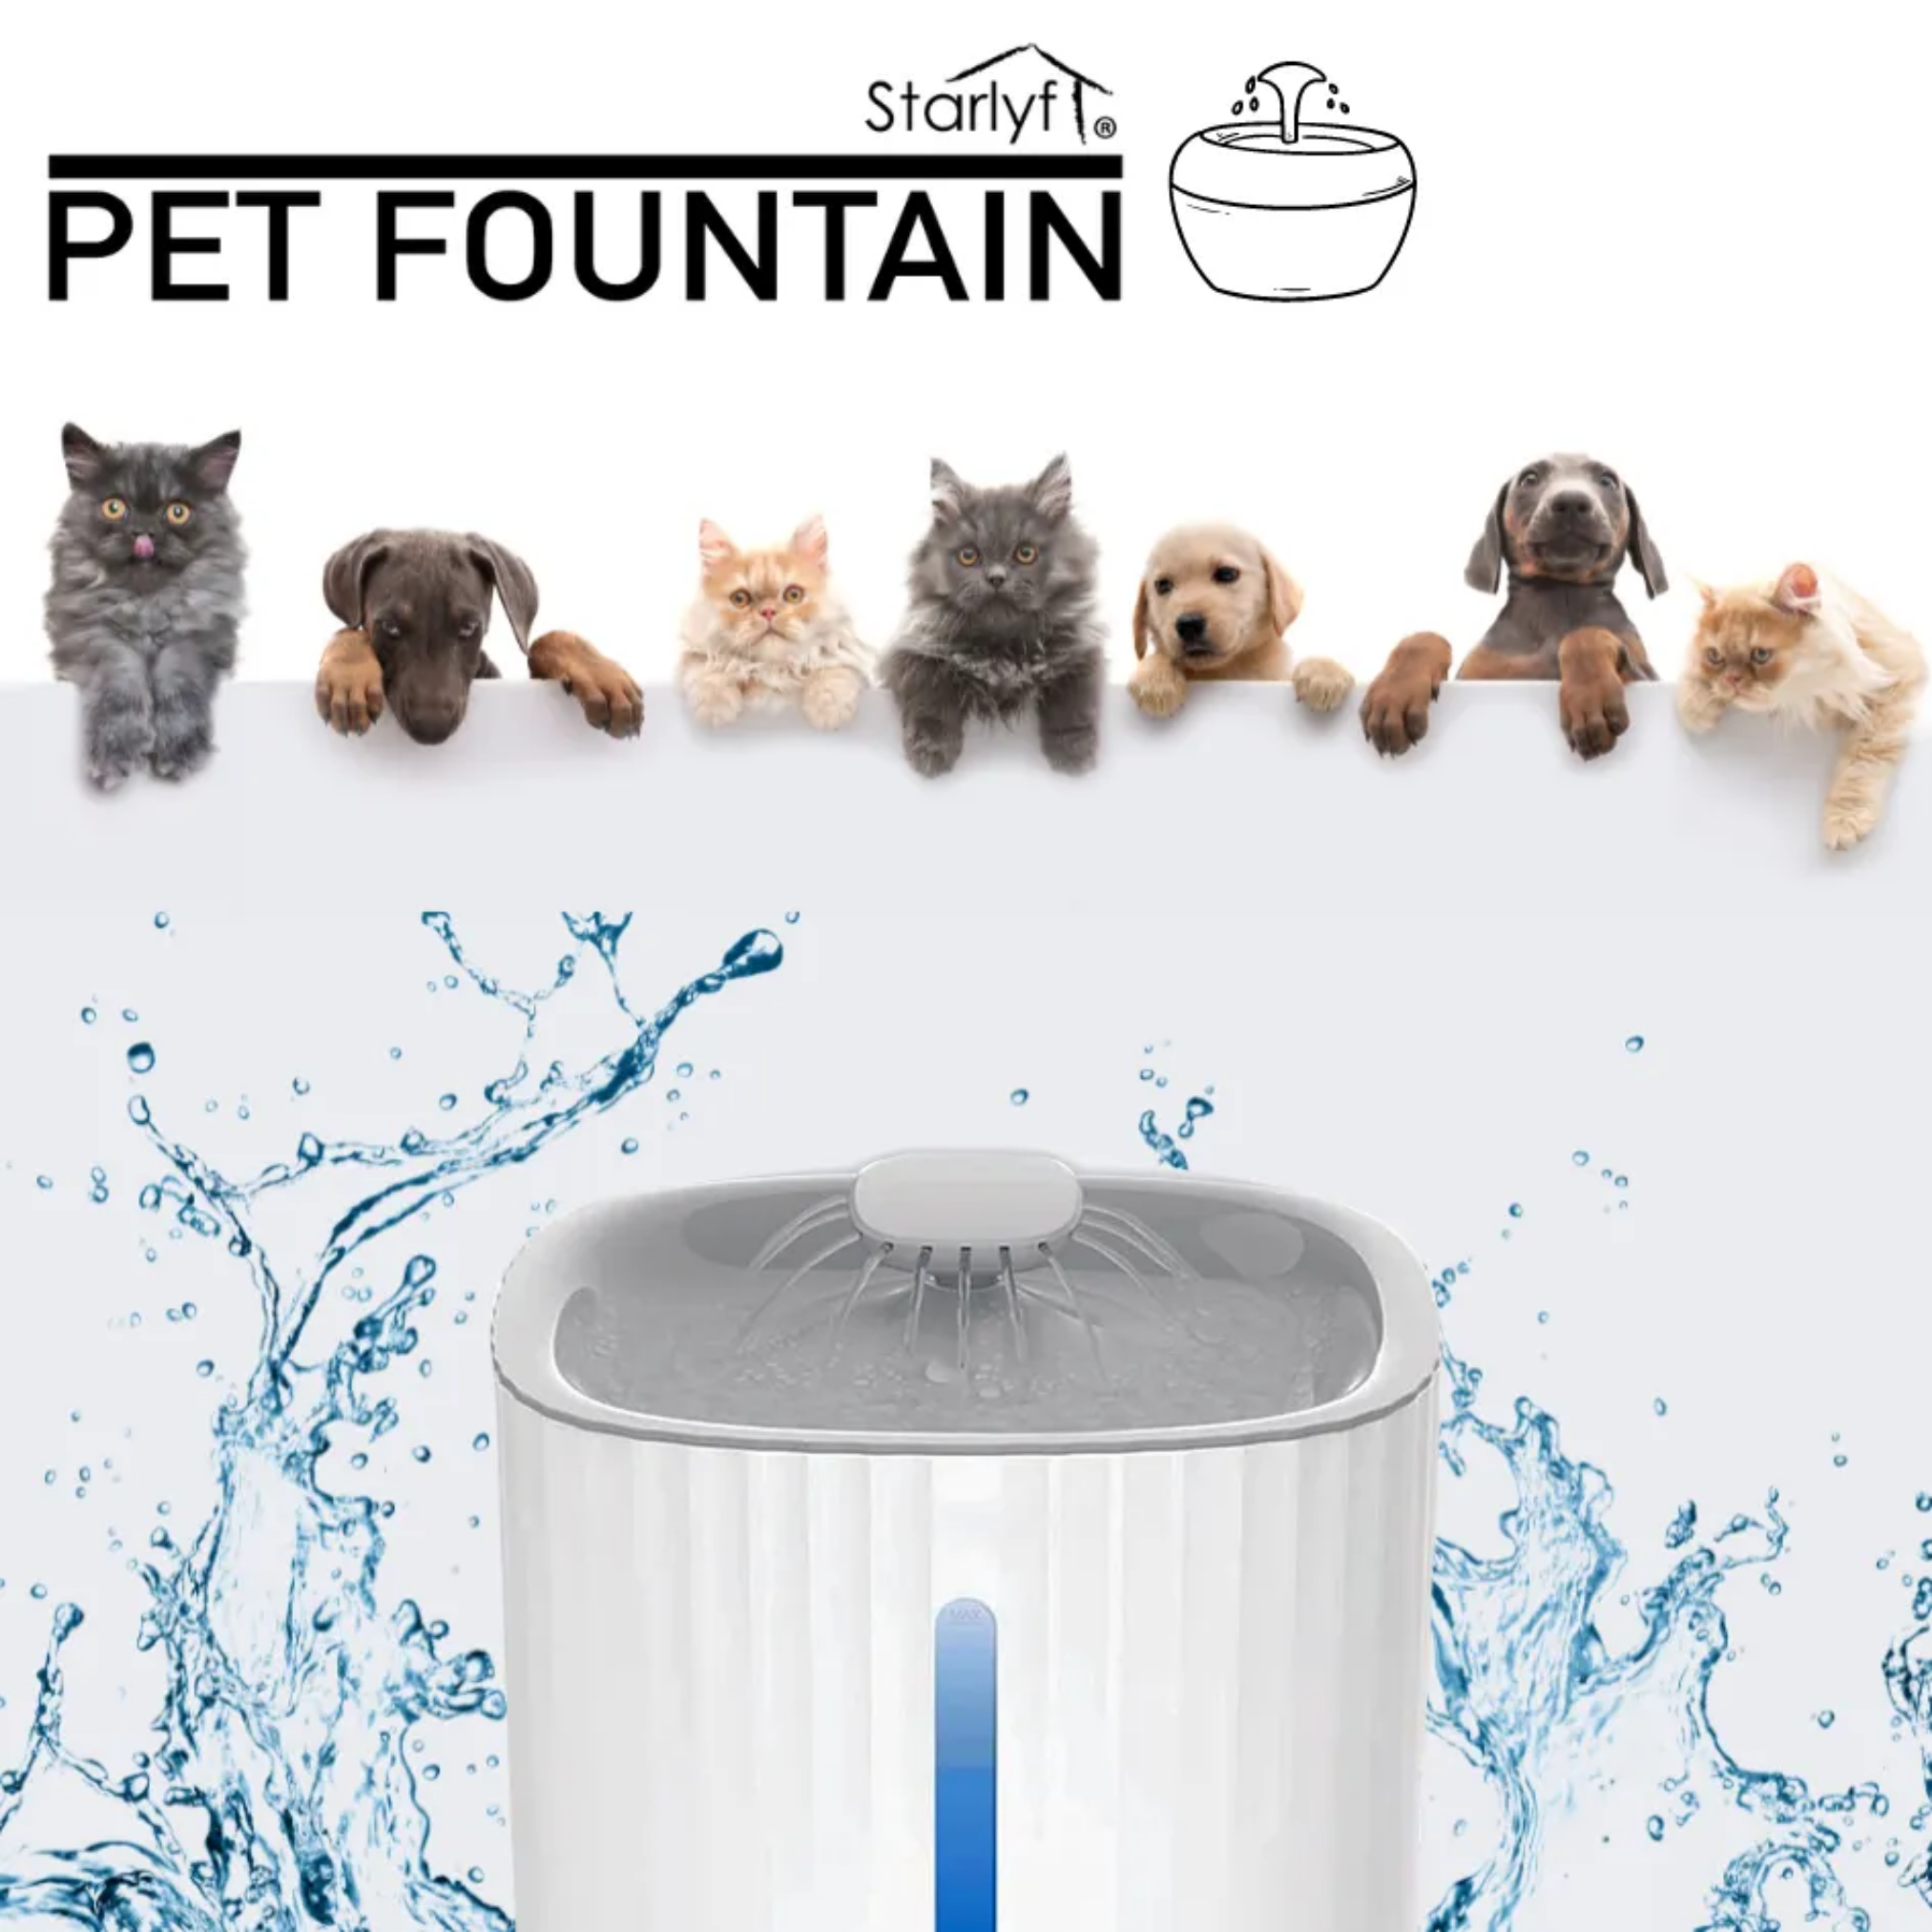 Haustiertränke Fountain Pet STARLYF